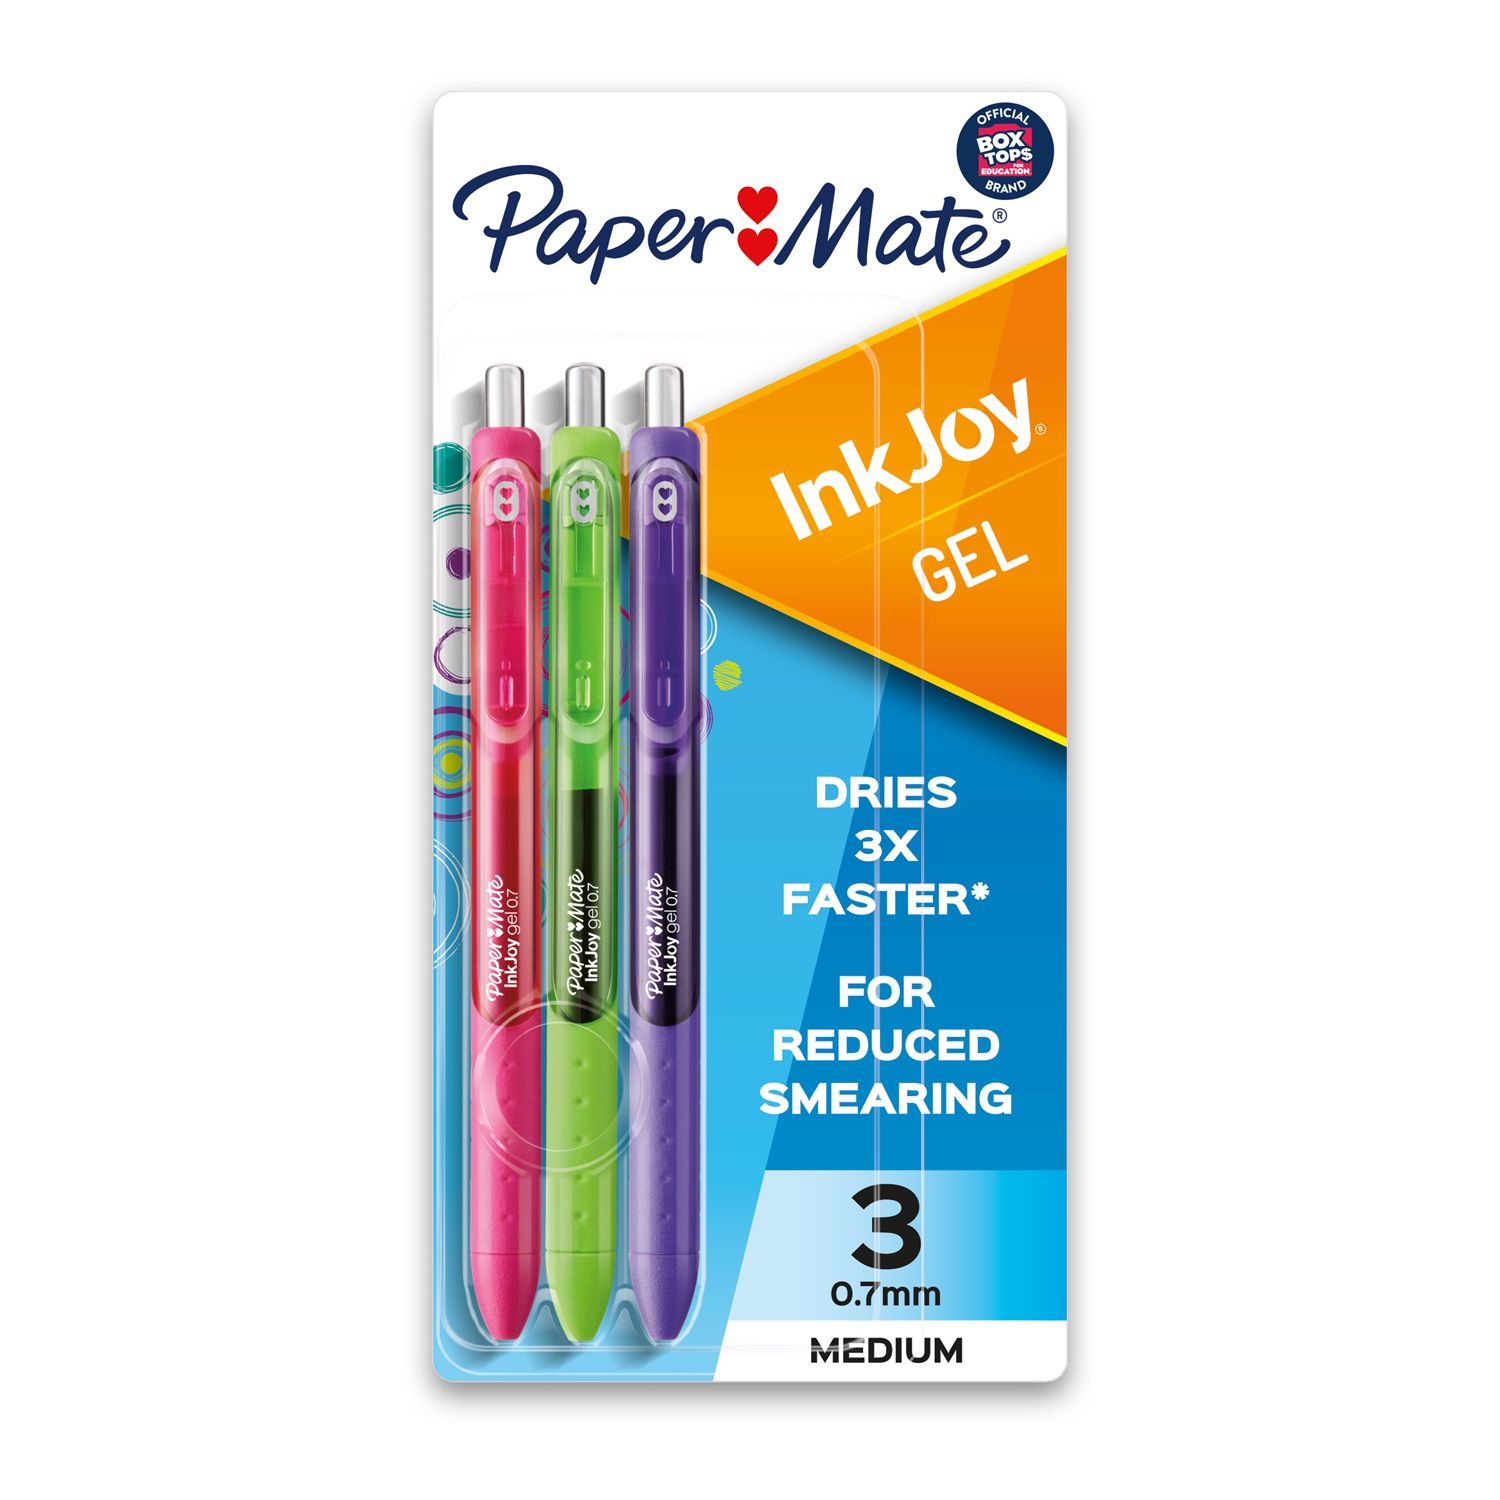 Cricut 5ct Fine Point Infusible Ink Pens - Watercolor Splash : Target